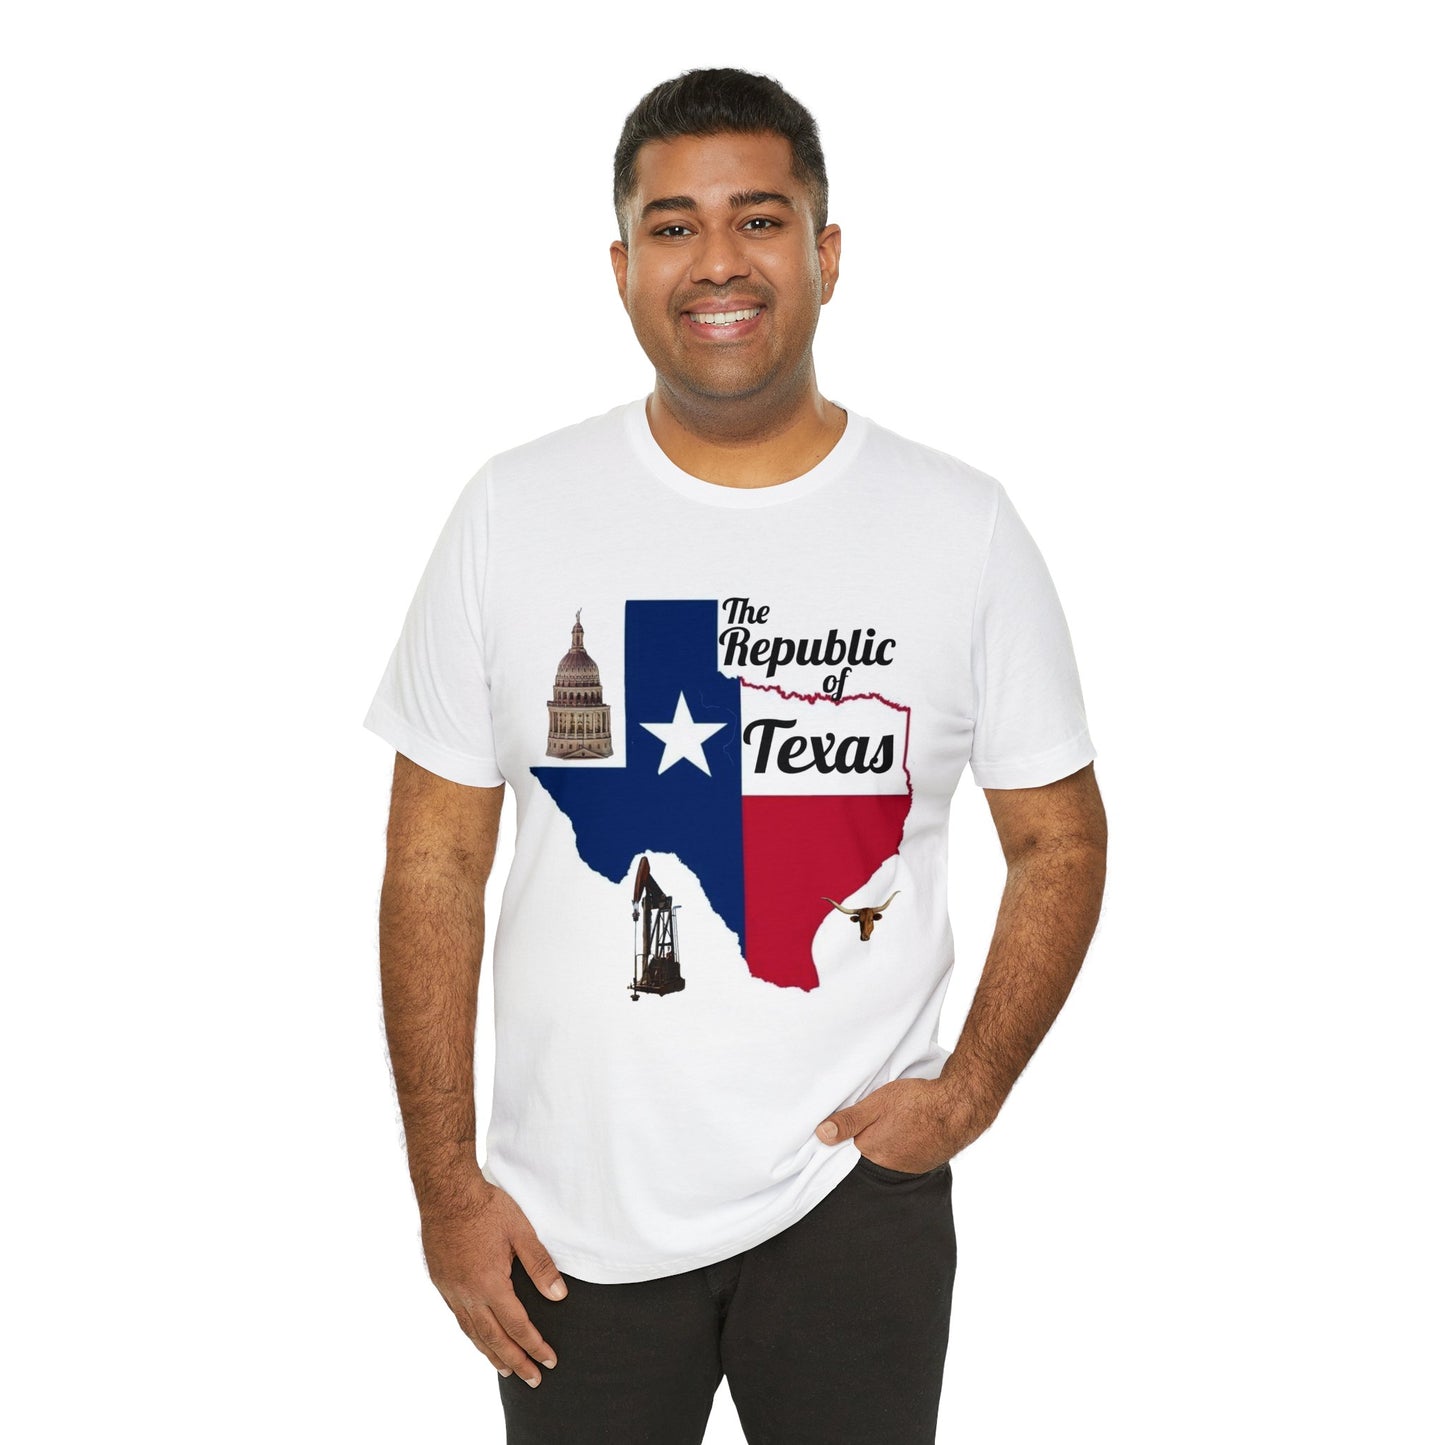 Rebublic of Texas -- Unisex Jersey Short Sleeve Tee